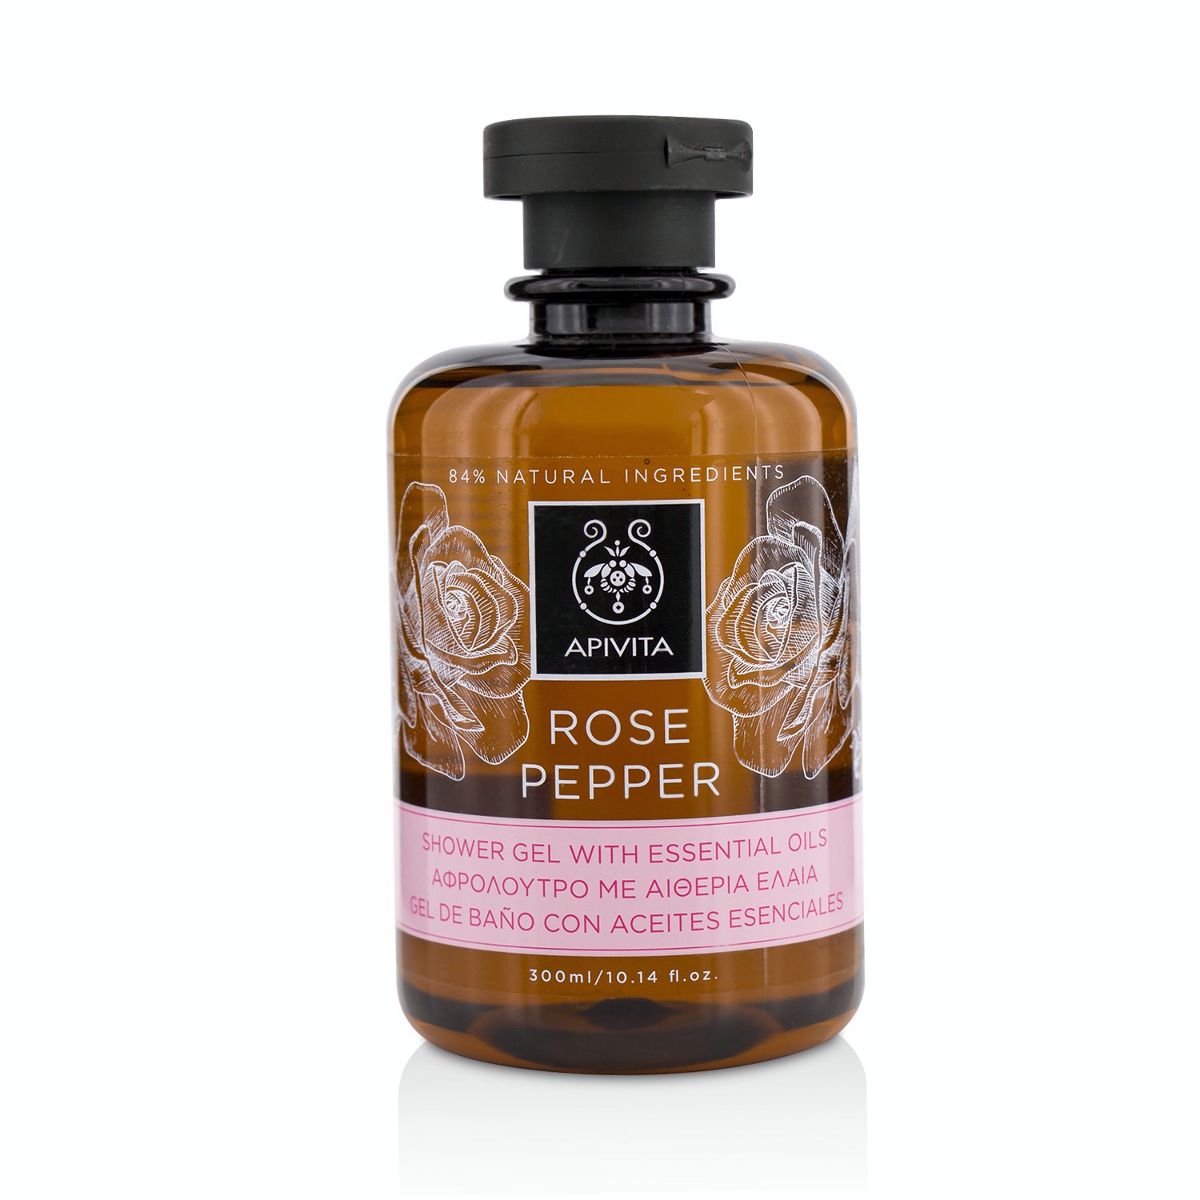 Rose Pepper Shower Gel with Essential Oils Apivita Image